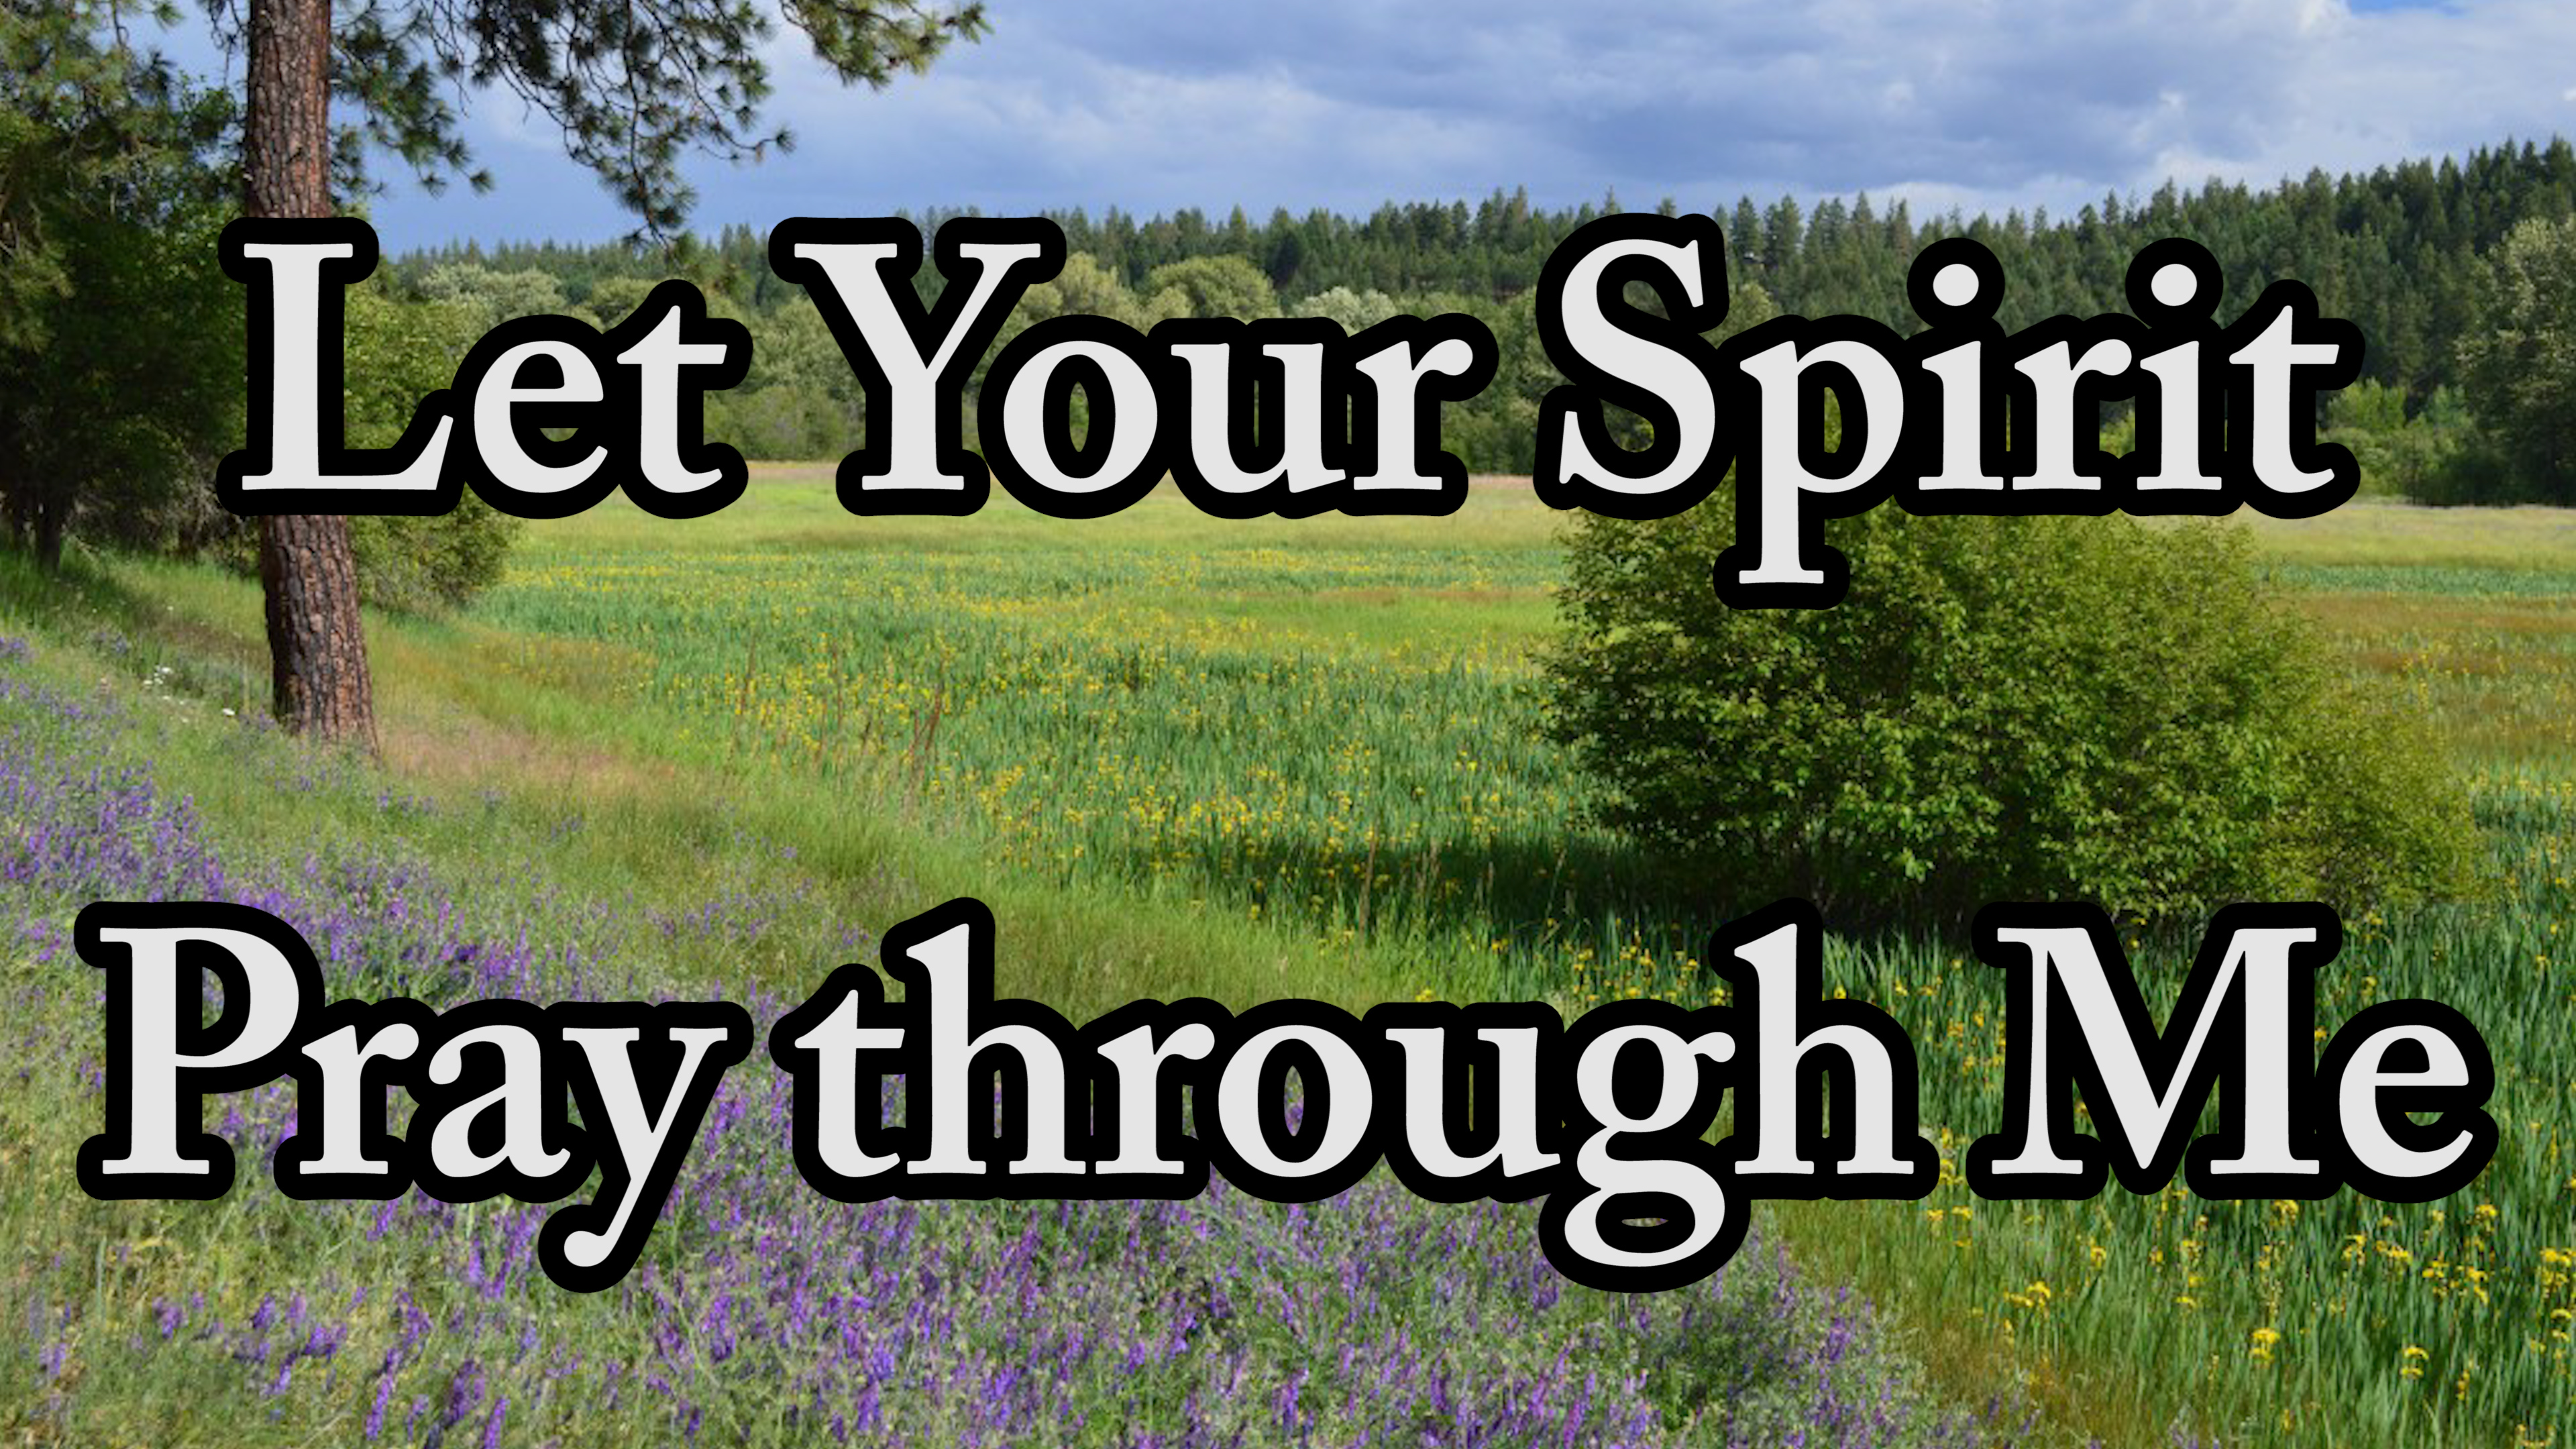 Let Your Spirit Pray through Me